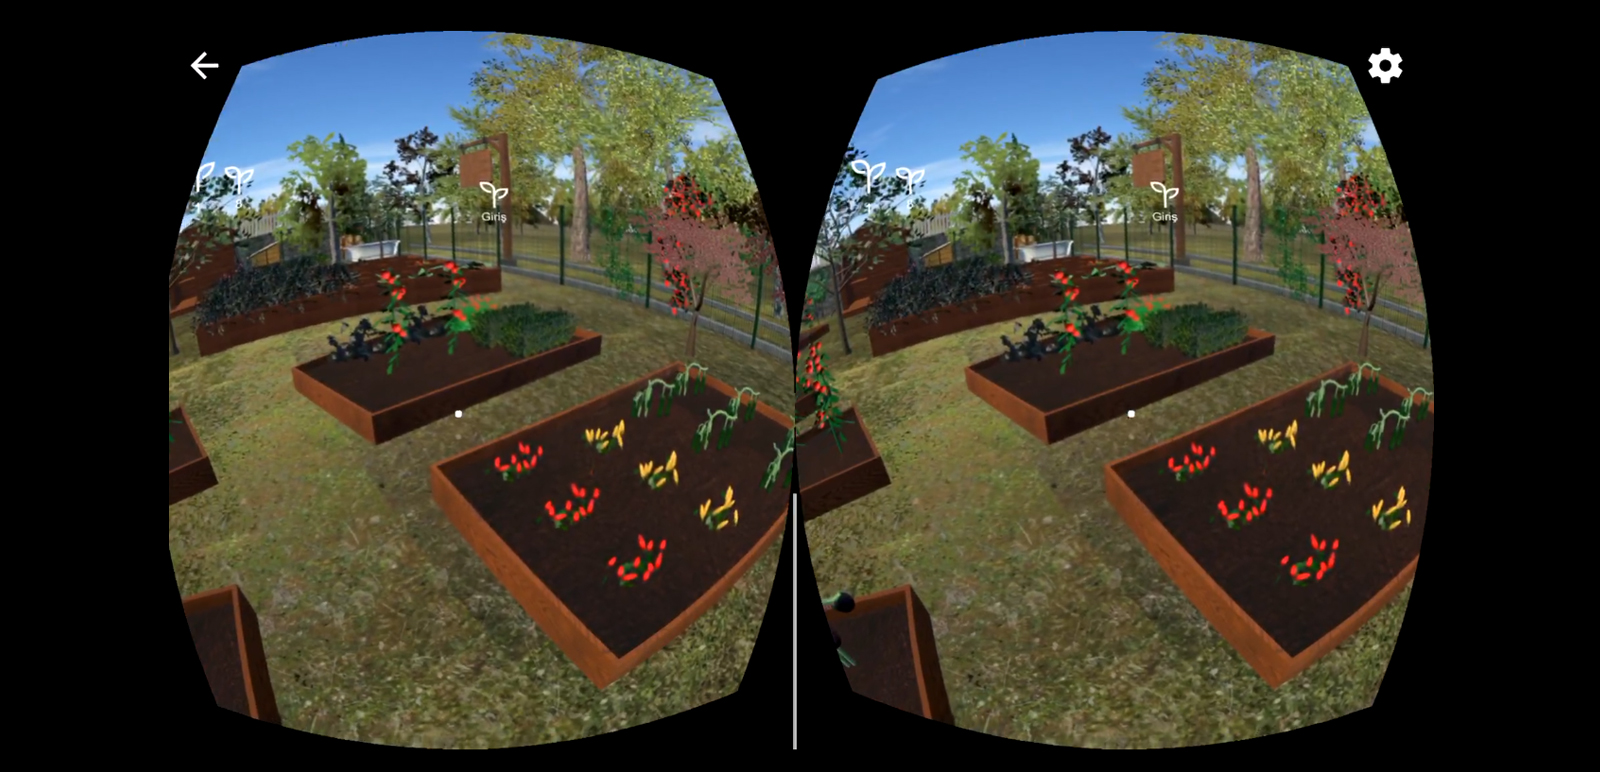 Saint Joseph Community Garden VR (Virtual Reality) Application 2